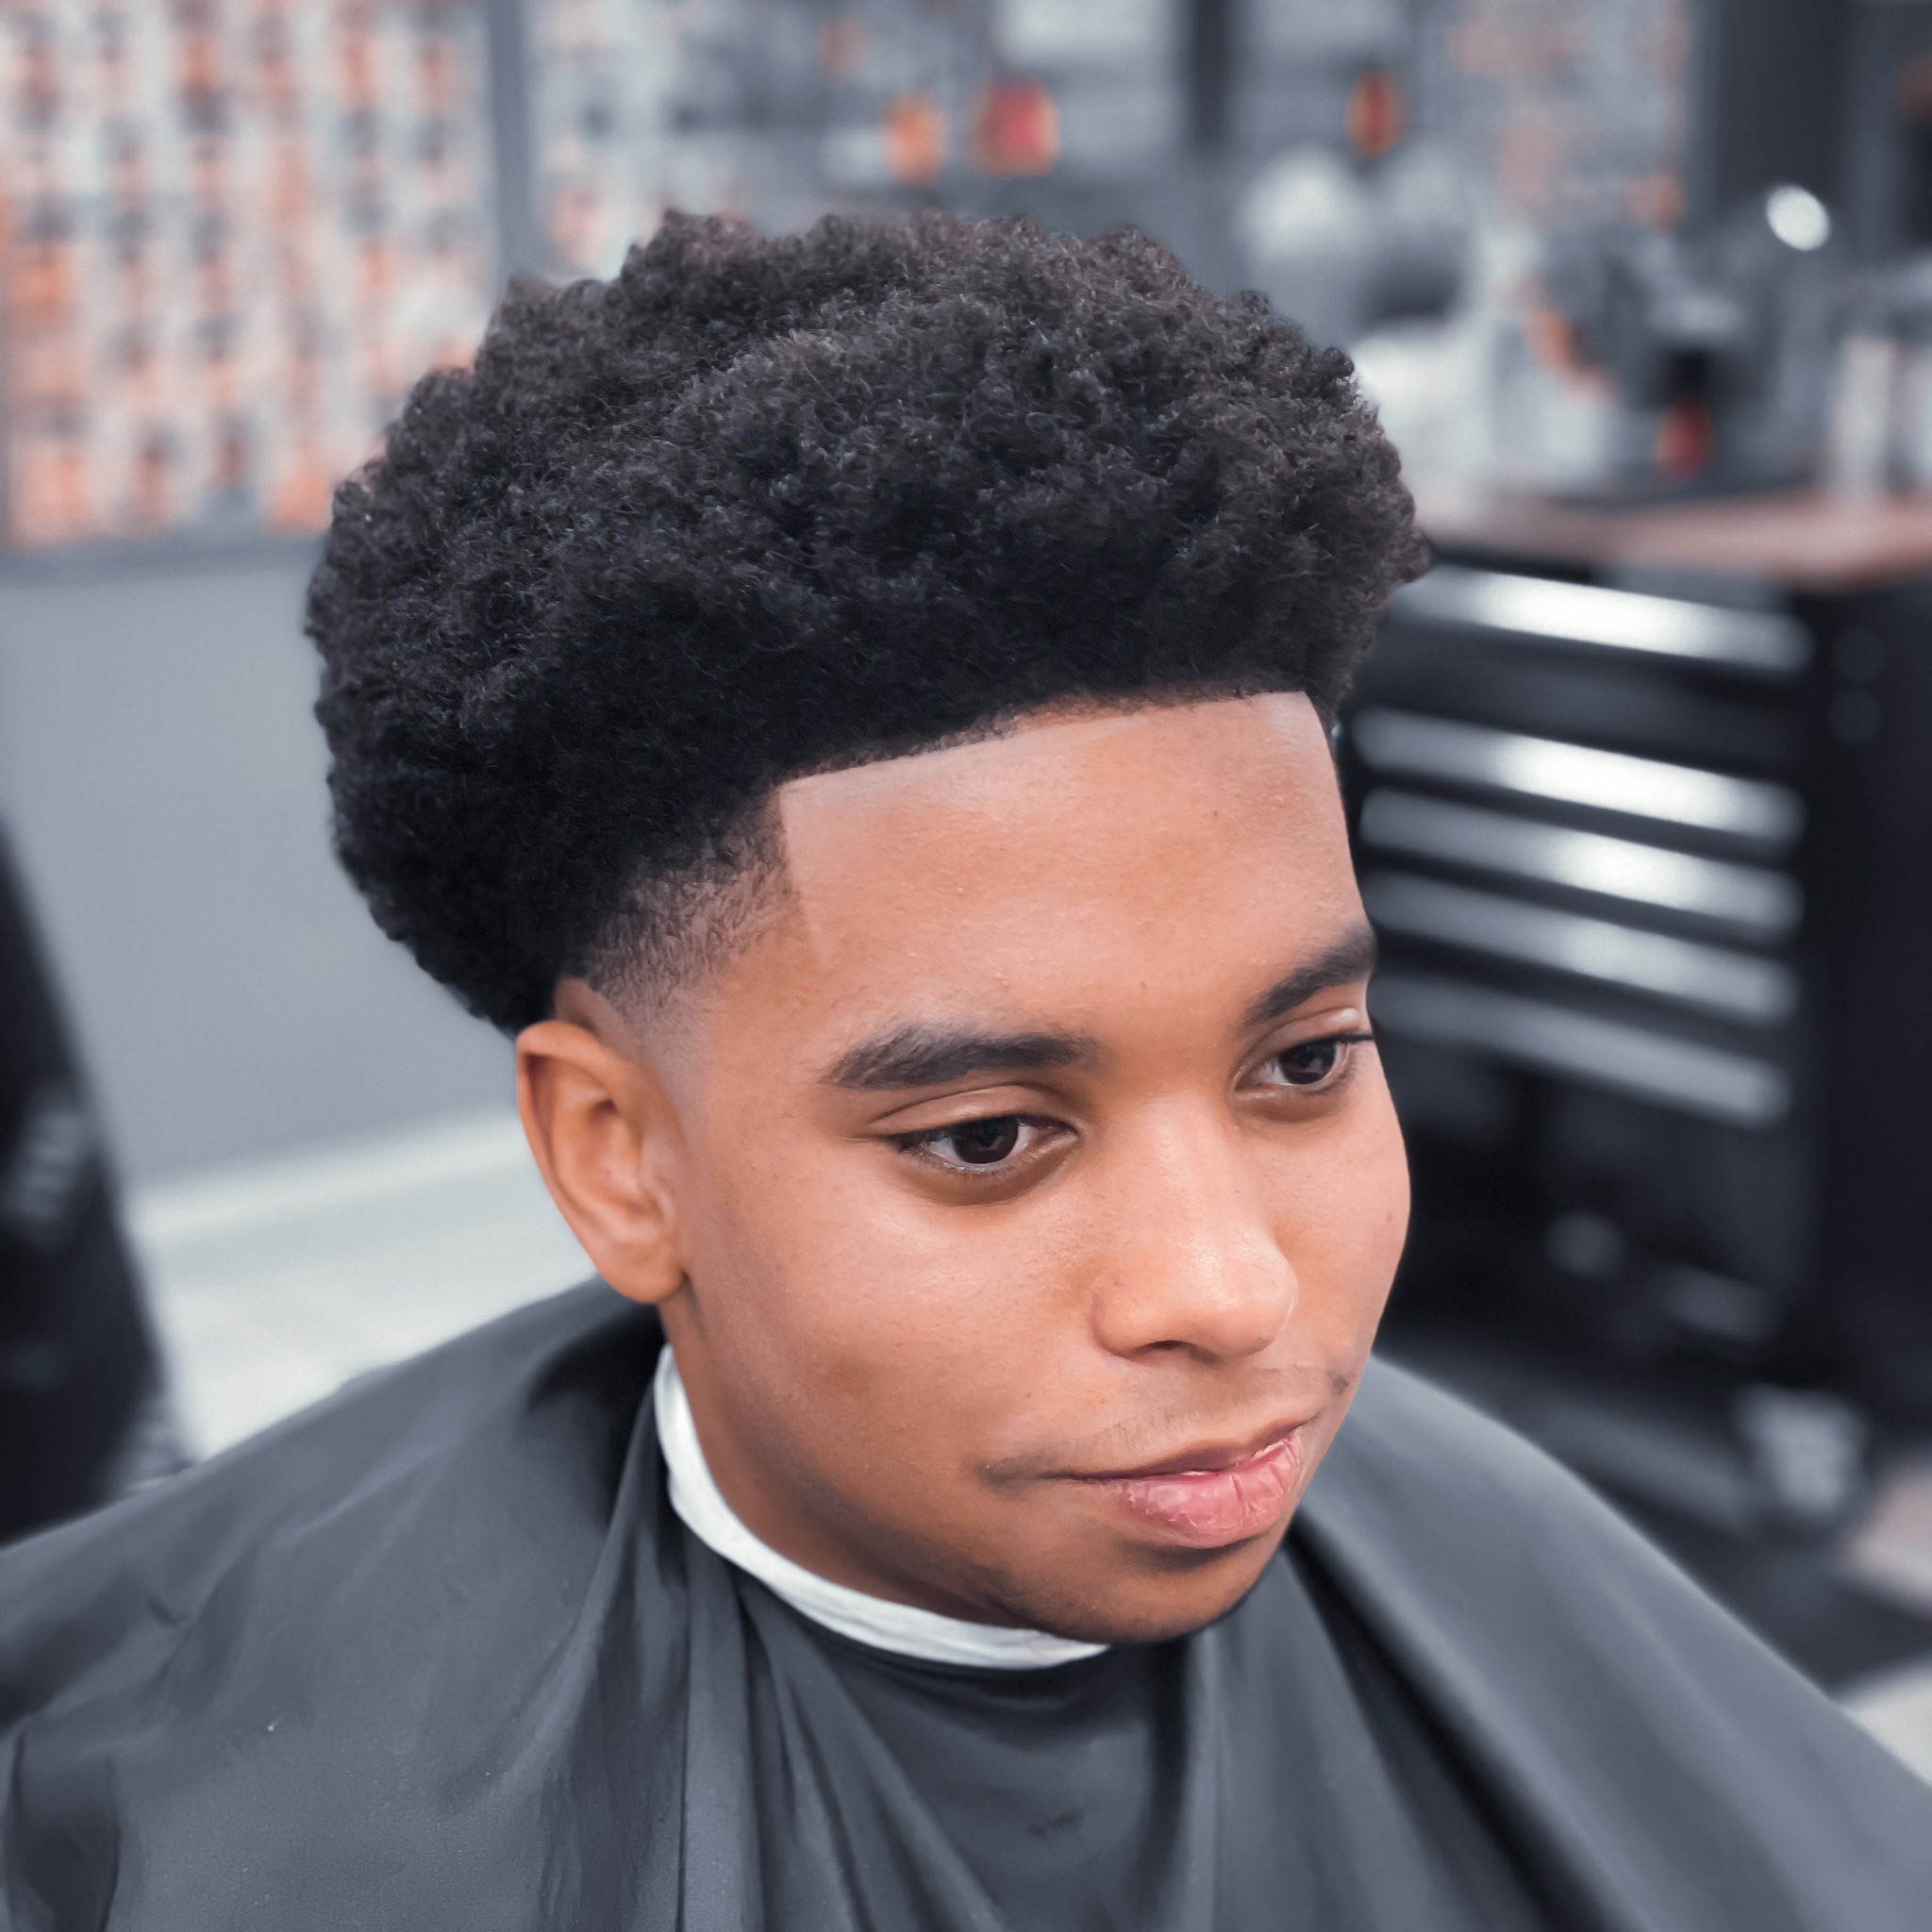 Joseph Rivera on X: #youngbarber #barbershopconnect #barberlove  #barberpost #menshair #beard #taper #haircut #haircuts #fade #mensgrooming  #clippers #lineup #taperfade #barbershop #barber #kngzbarber  #showcasebarber #barbersinctv #joethebarber